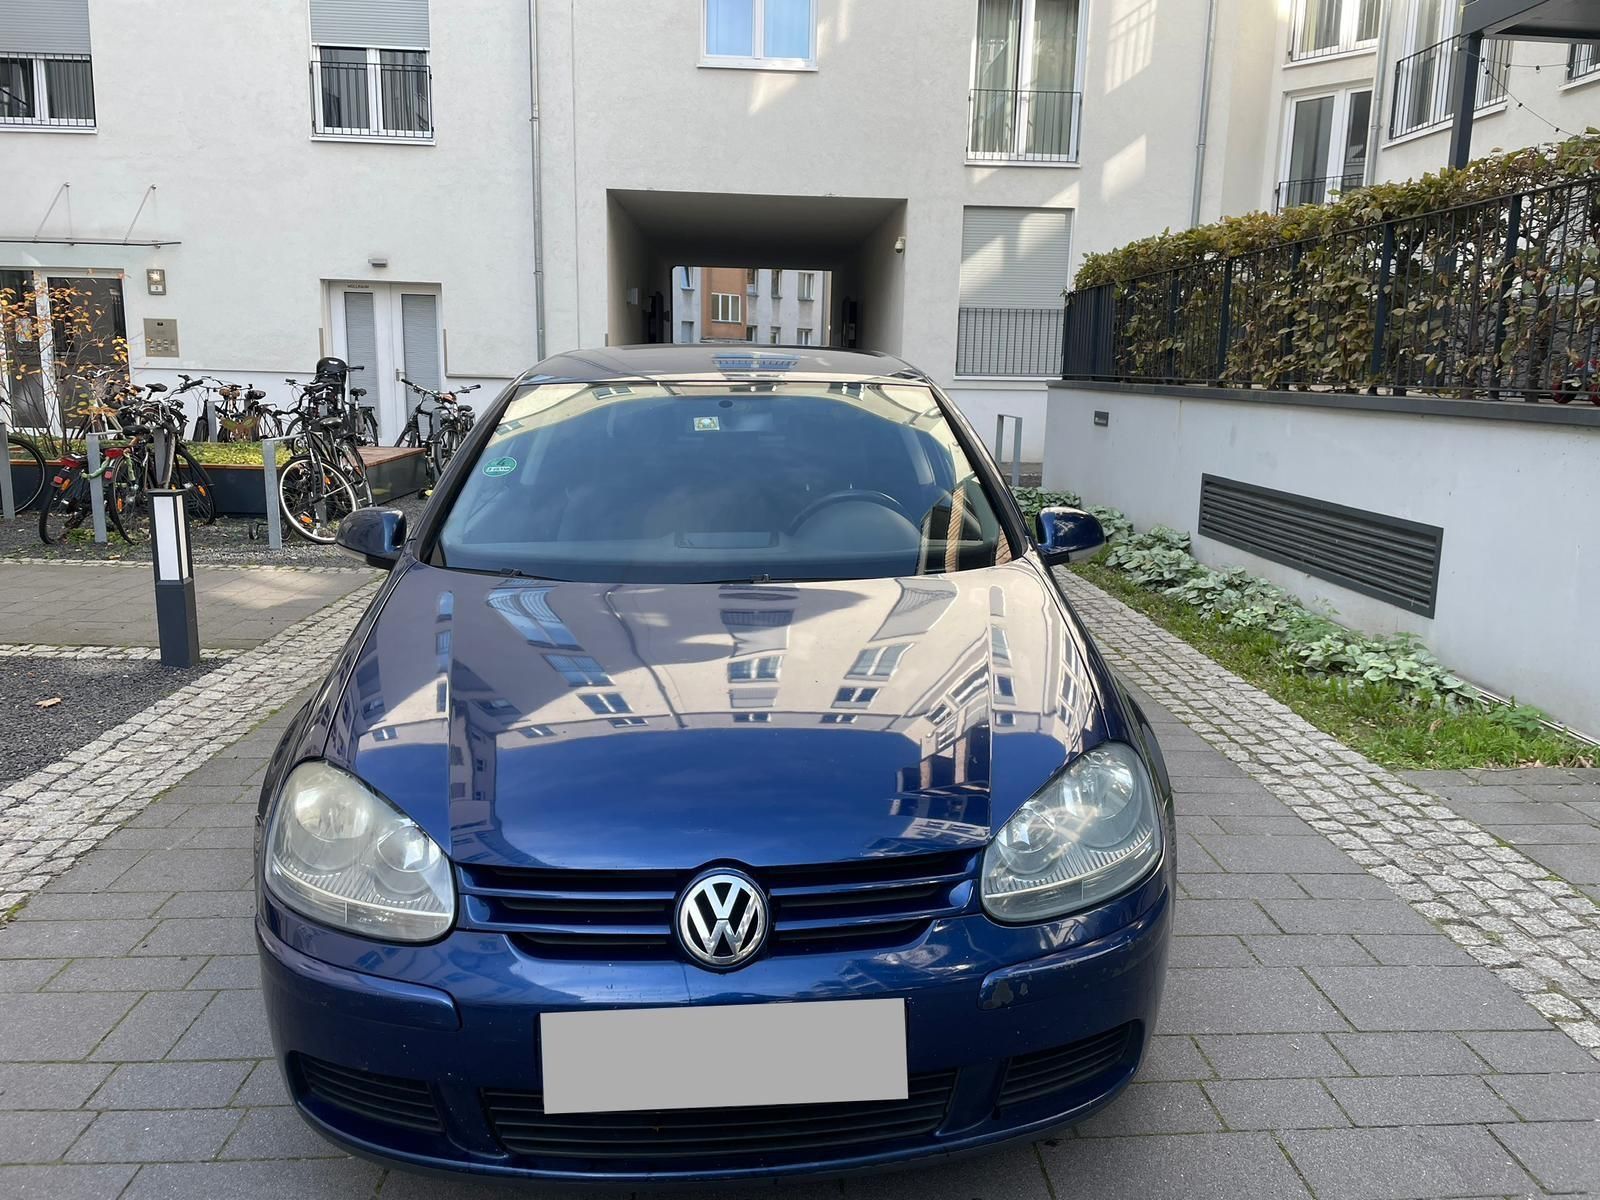 VW Golf 1.6 MPI 102 KM 2005r